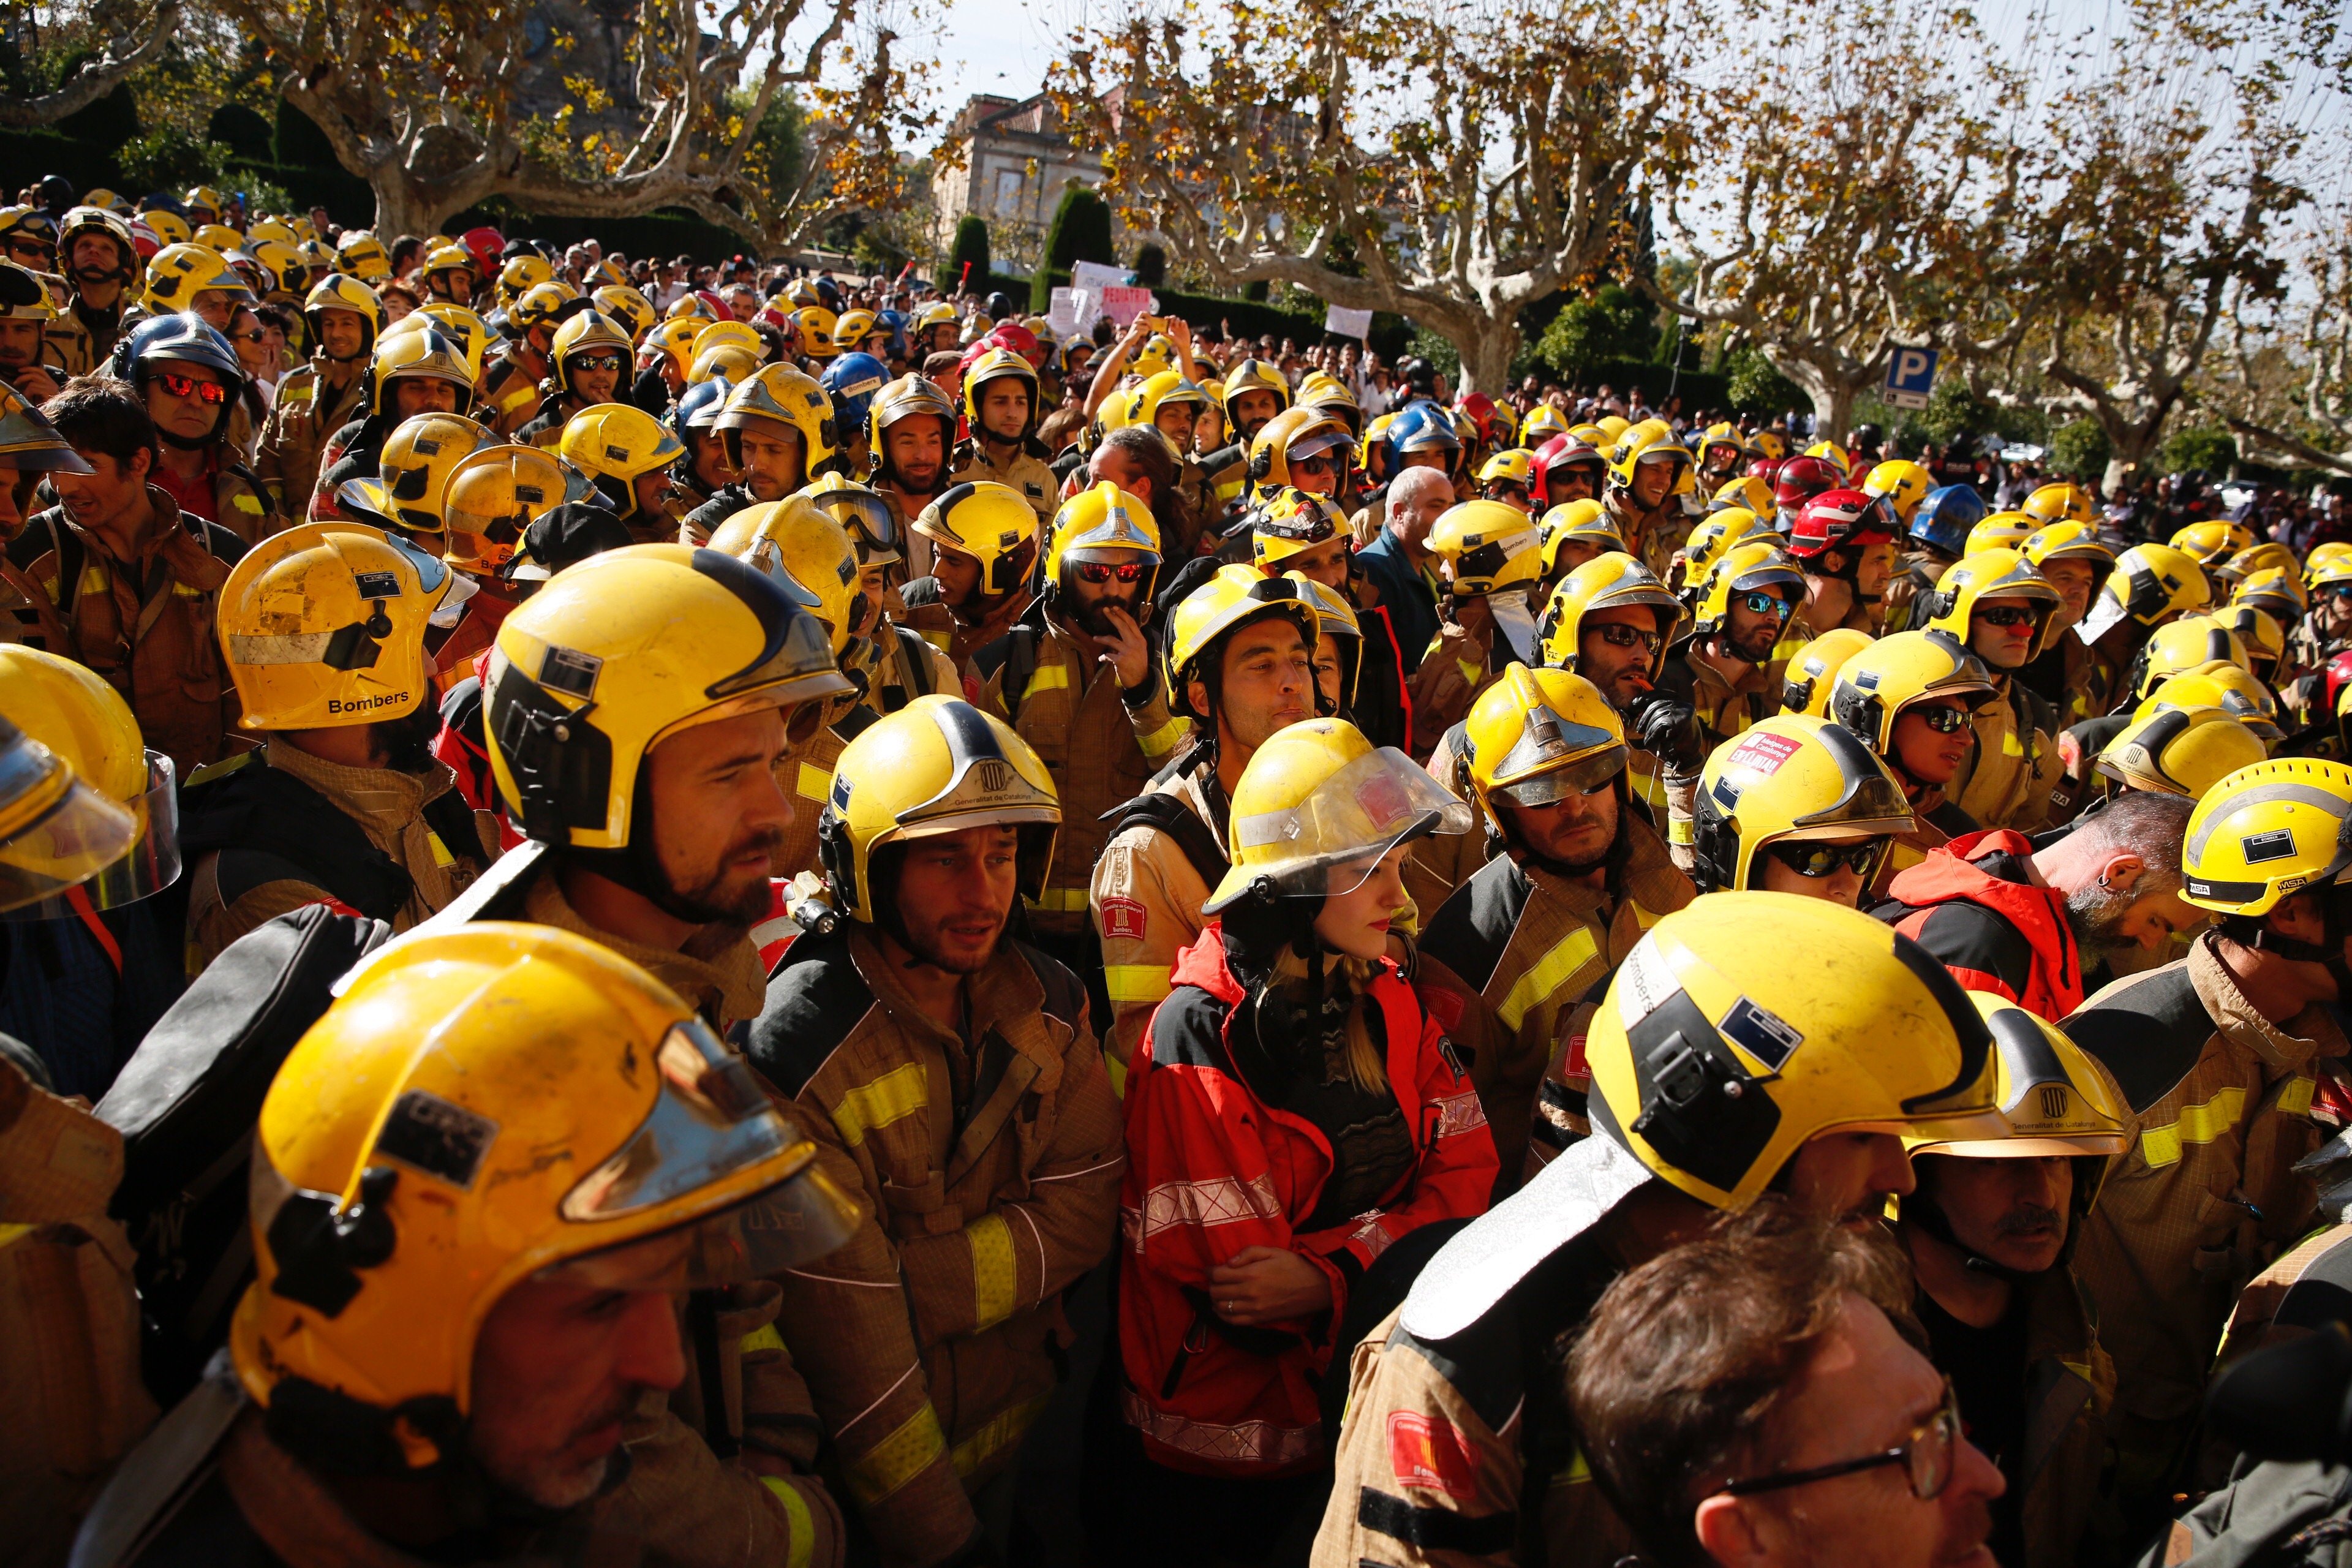 Buch promete 52 millones de euros para renovar material y parques de bomberos